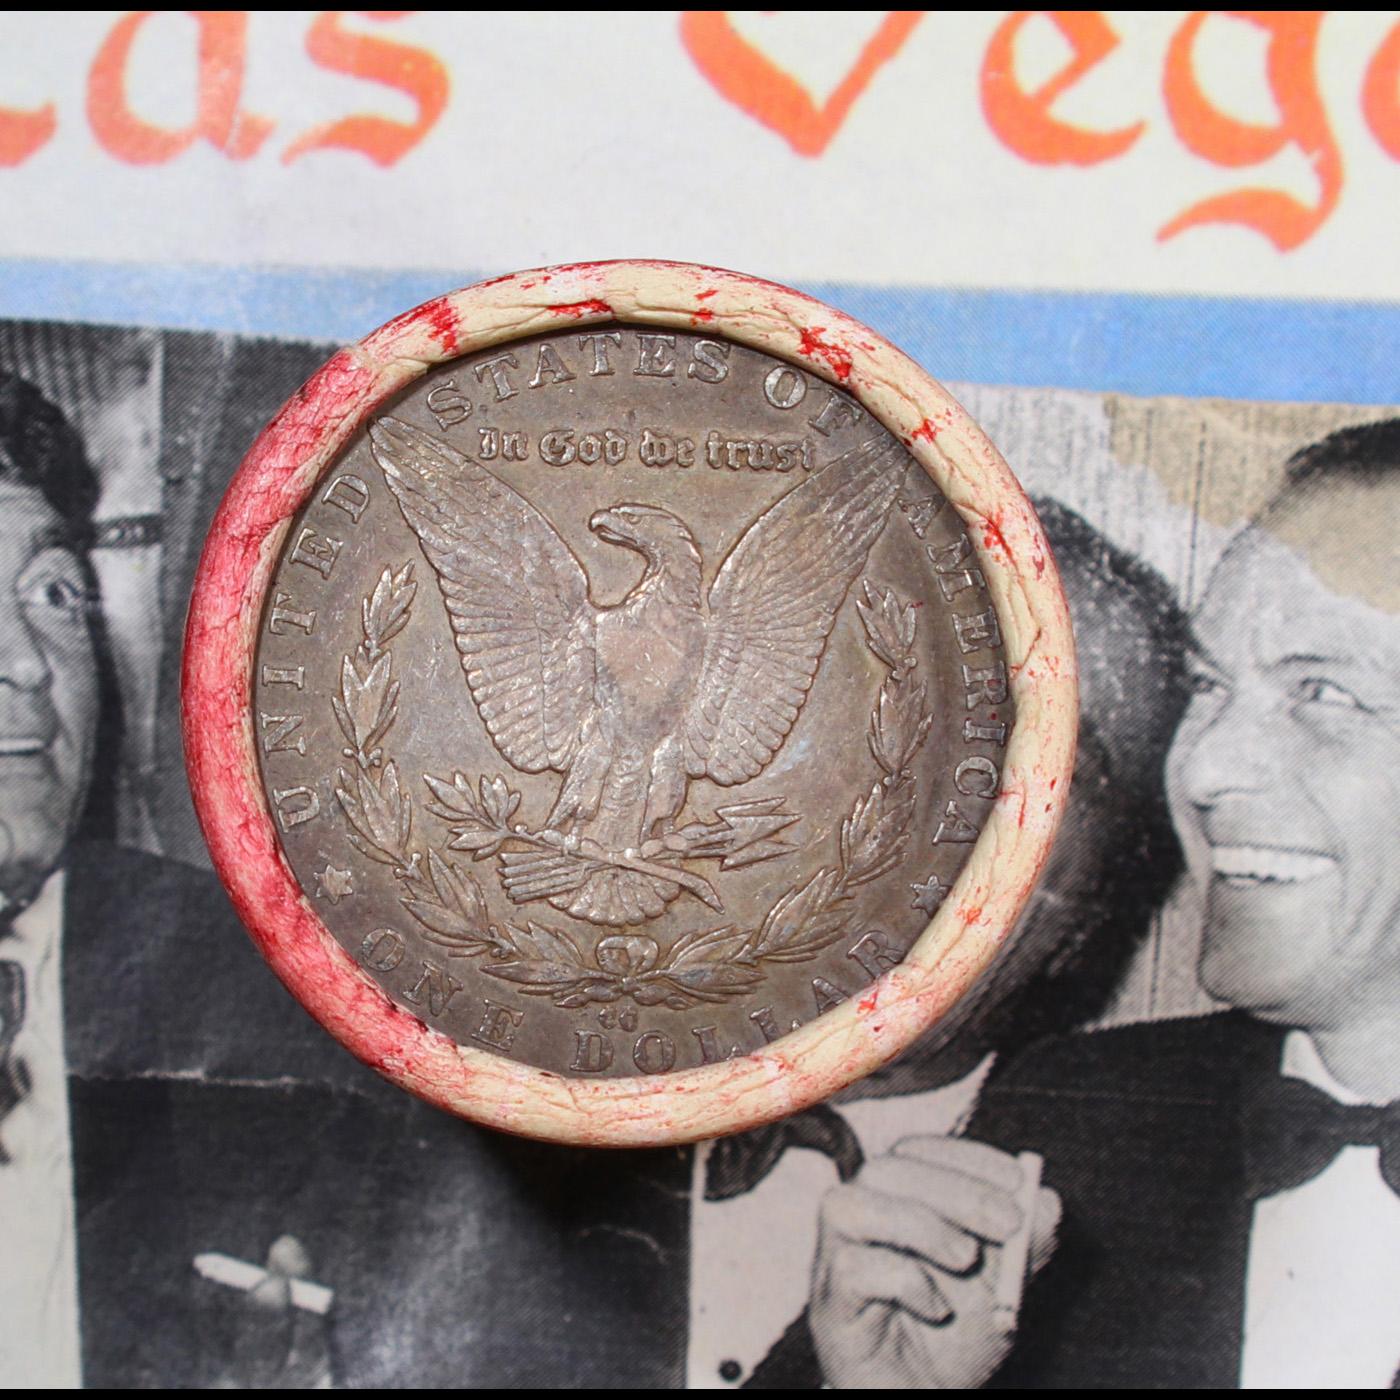 ***Auction Highlight*** Full Morgan/Peace Casino Las Vegas Horseshoe silver $1 roll $20, 1927 & 'cc'